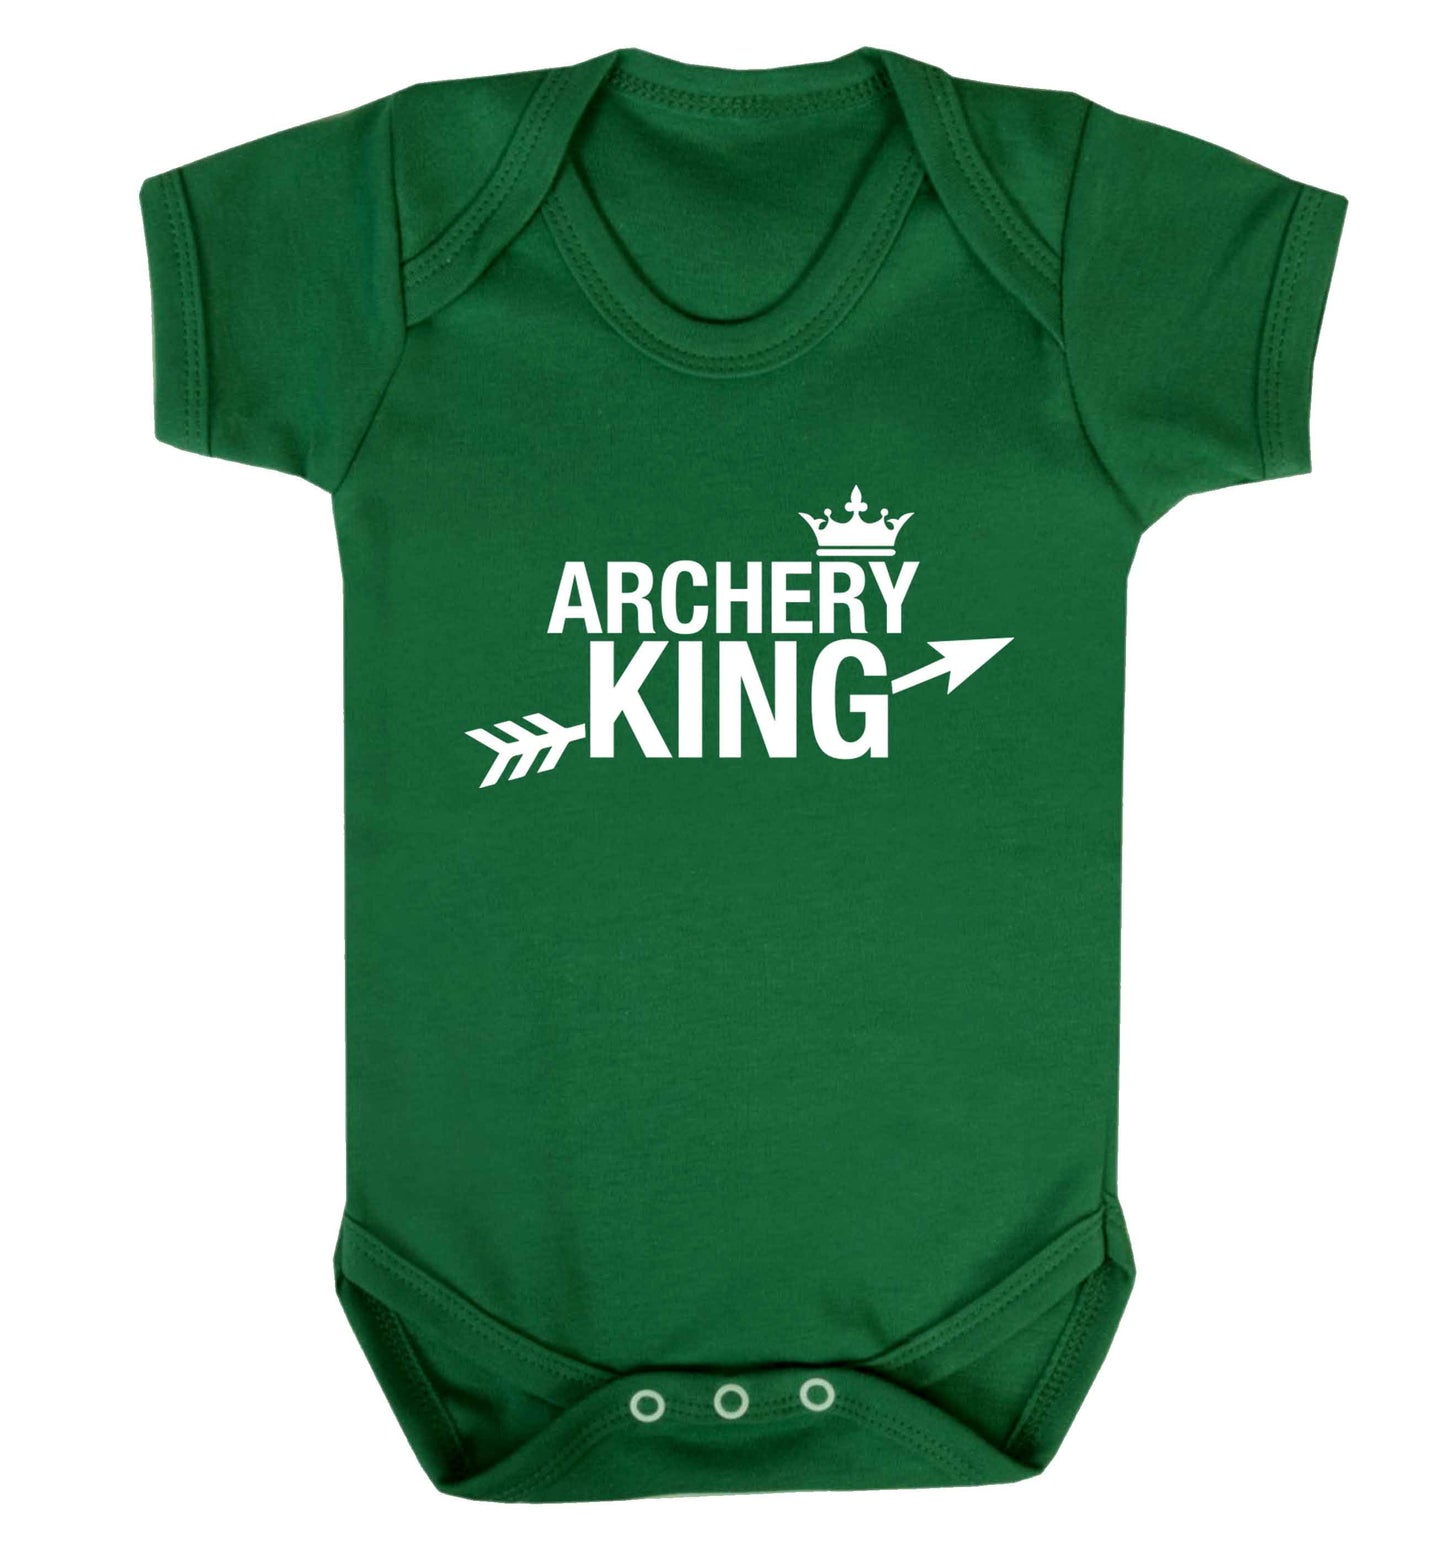 Archery king Baby Vest green 18-24 months